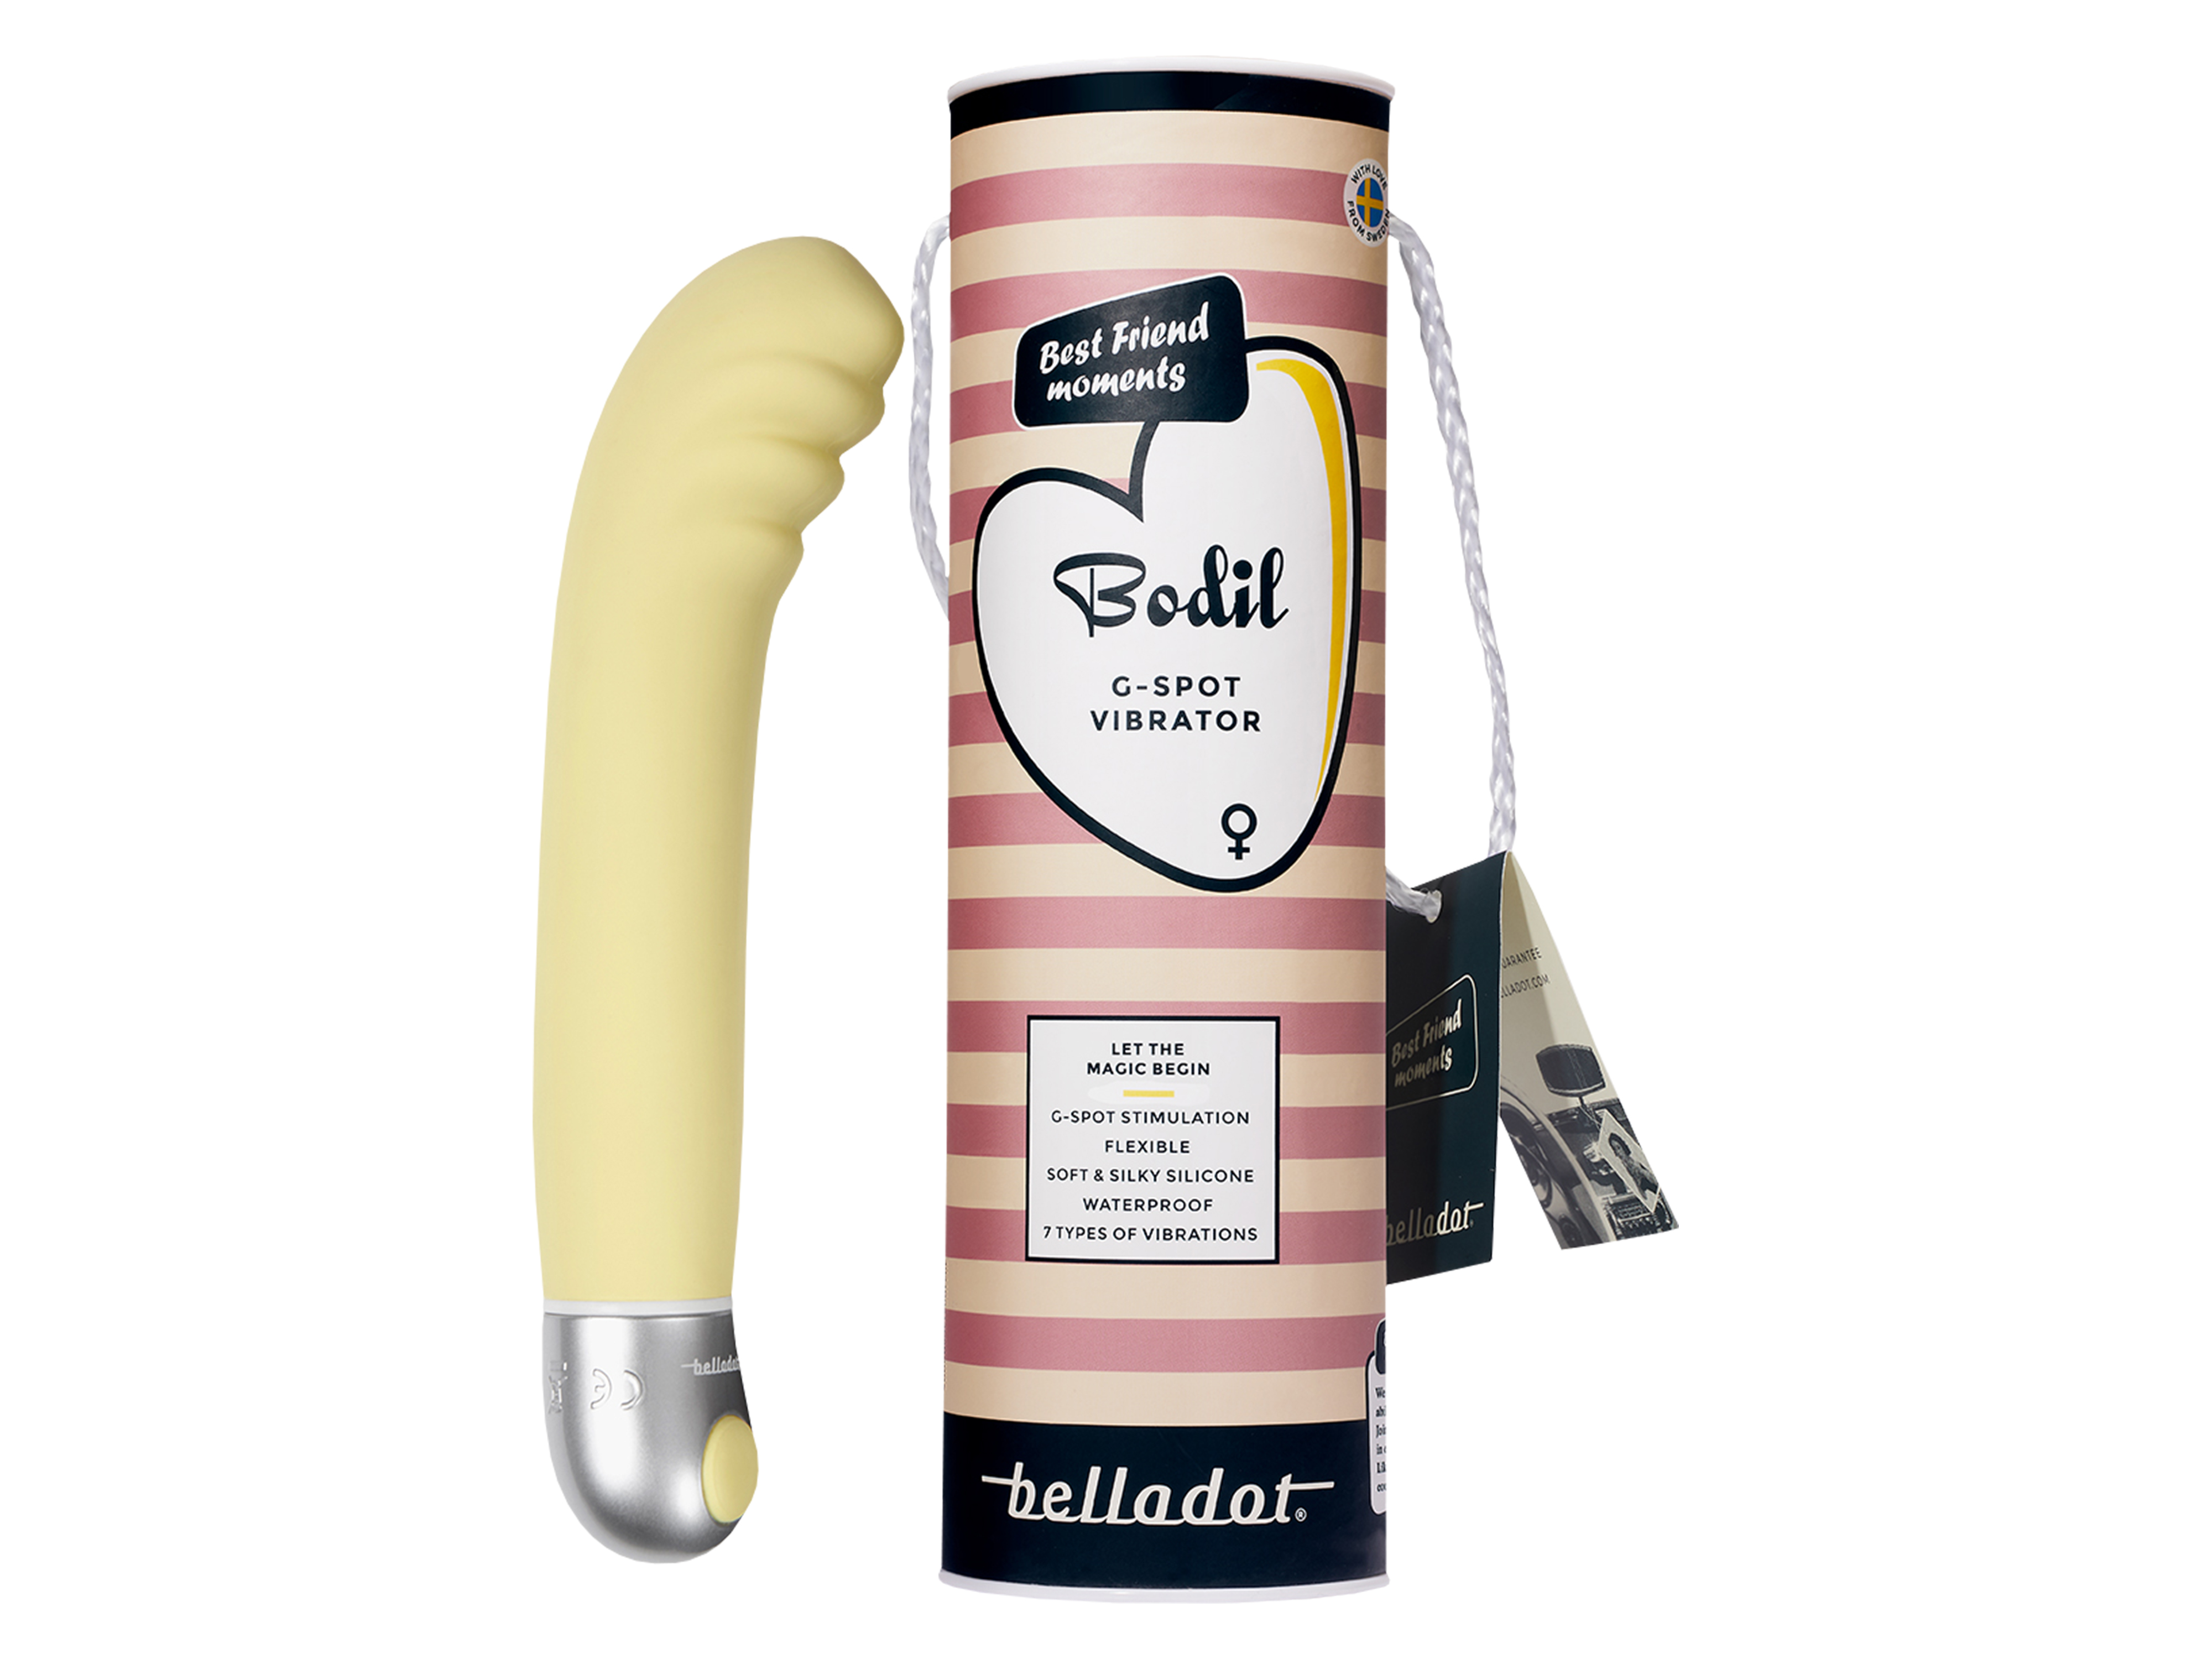 Belladot Bodil G-Spot Vibrator, Gul, 1 stk.